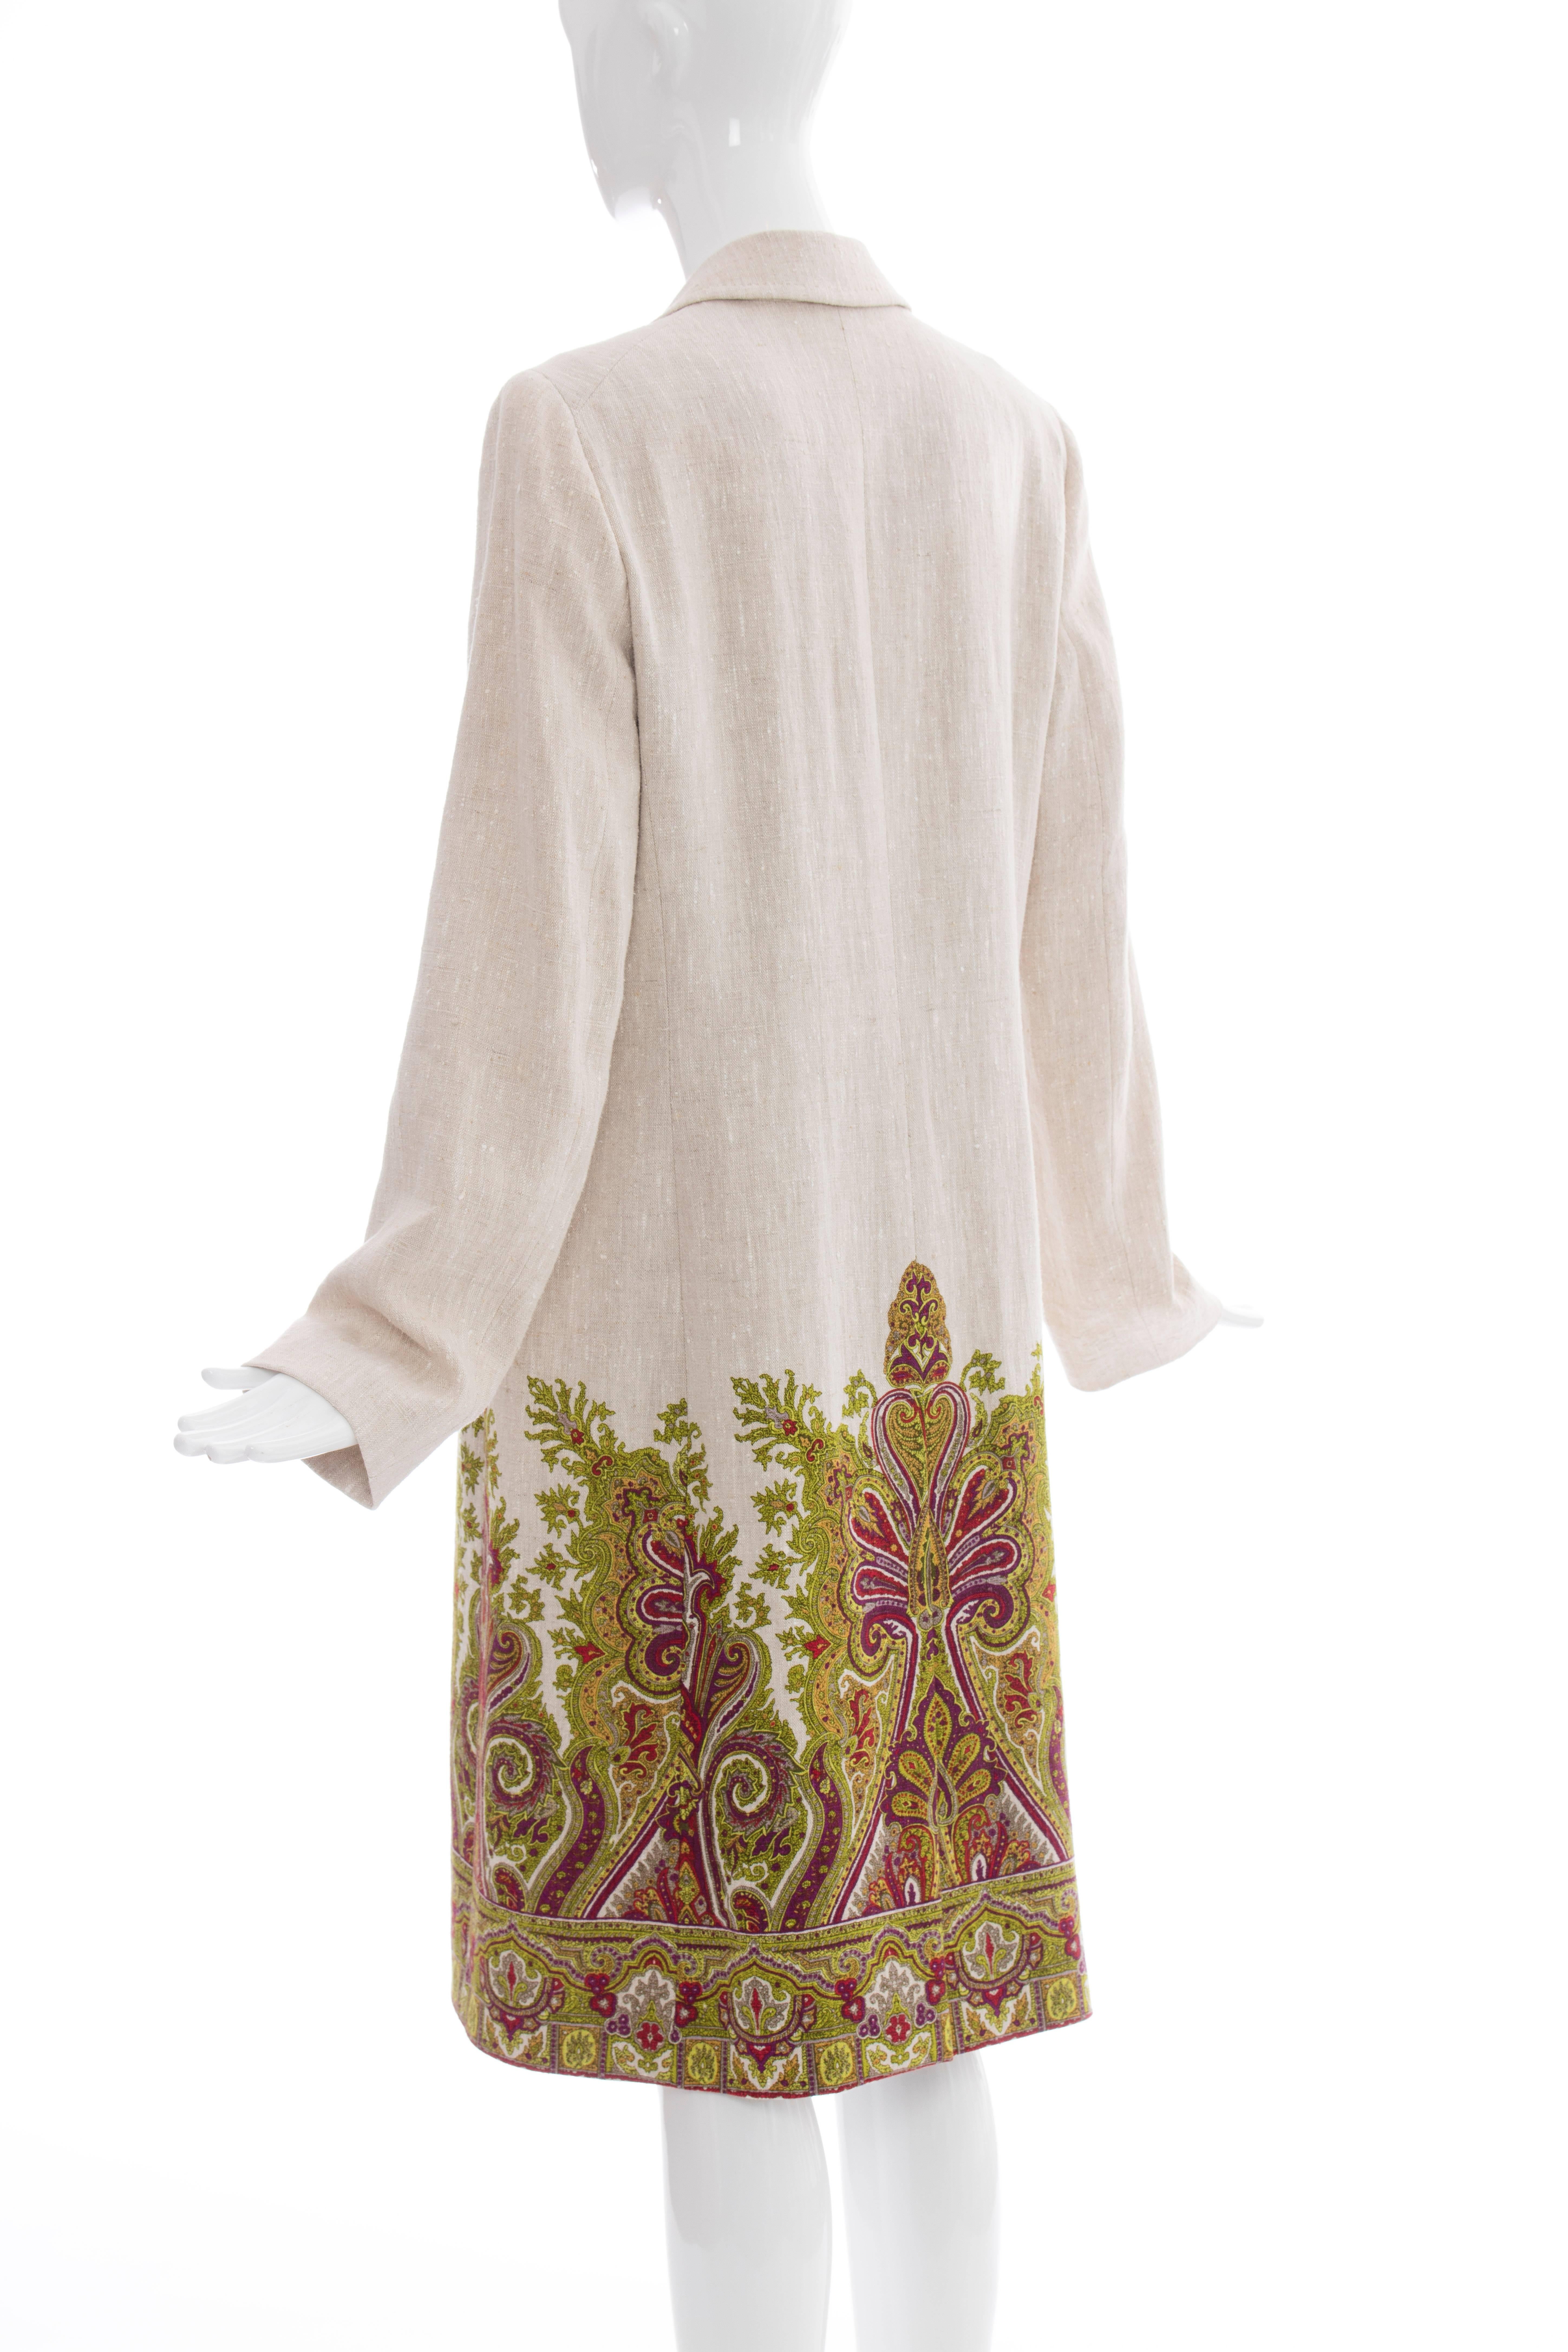 Etro Paisley Printed Lightweight Linen Coat, Spring 2007 2